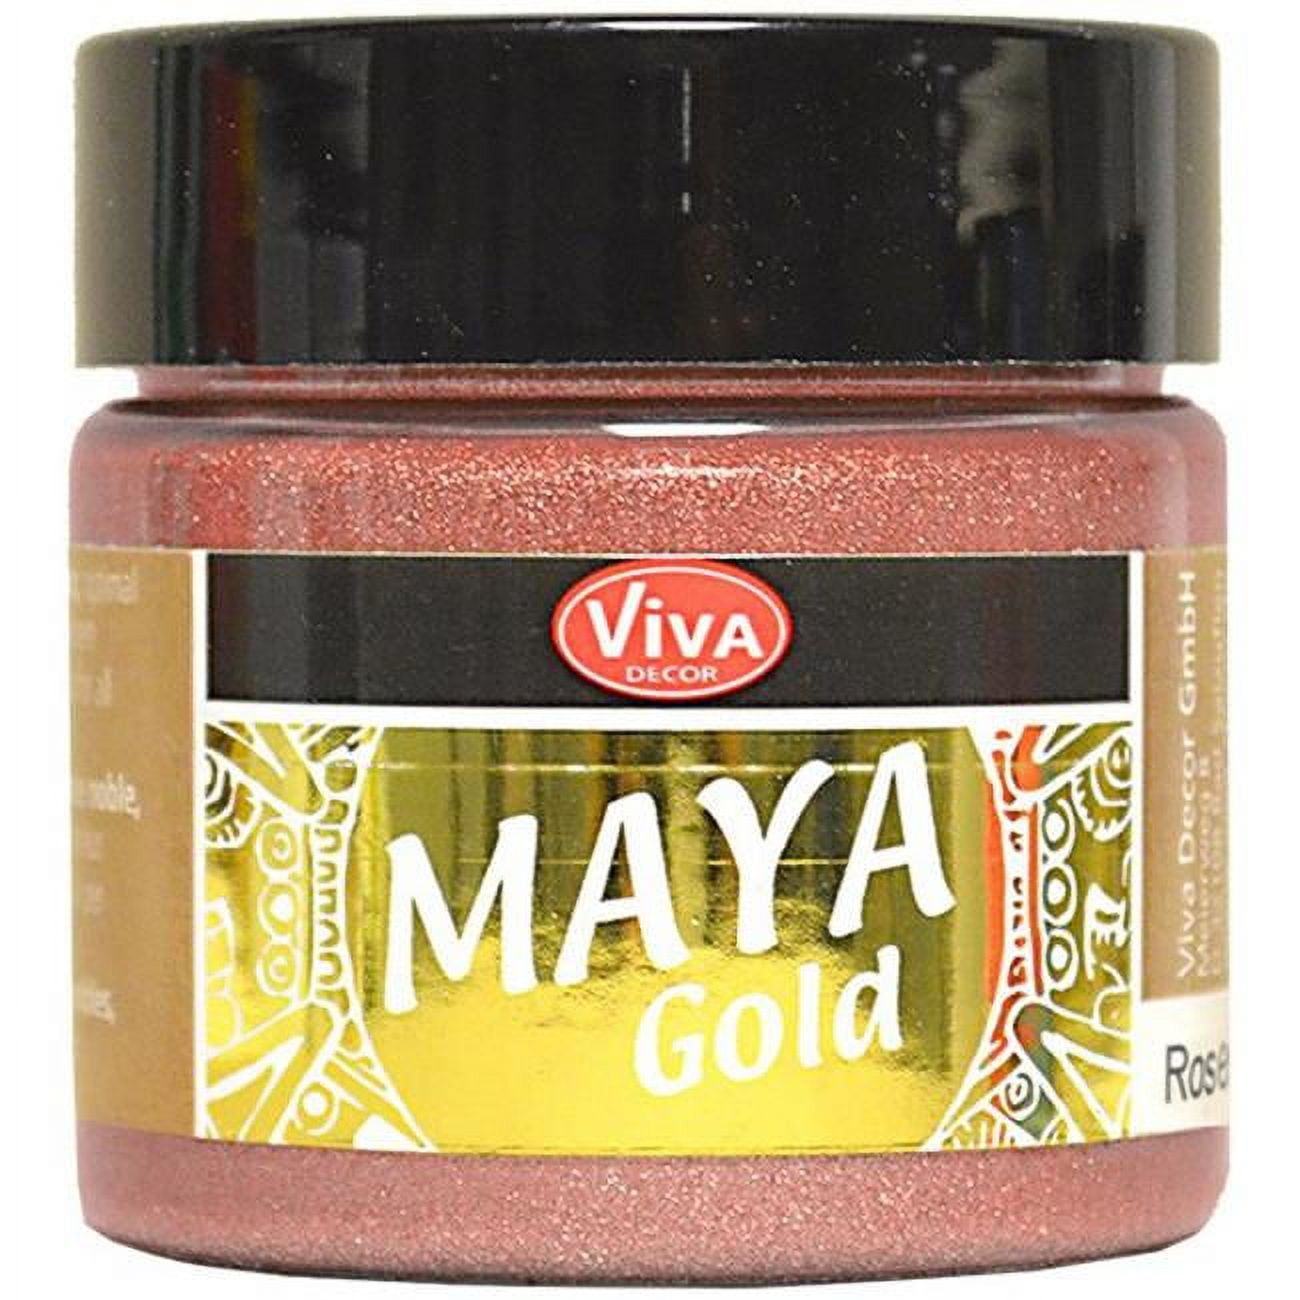  Viva Decor Maya Gold (Gold) 8.45 Fl Oz - Shiny